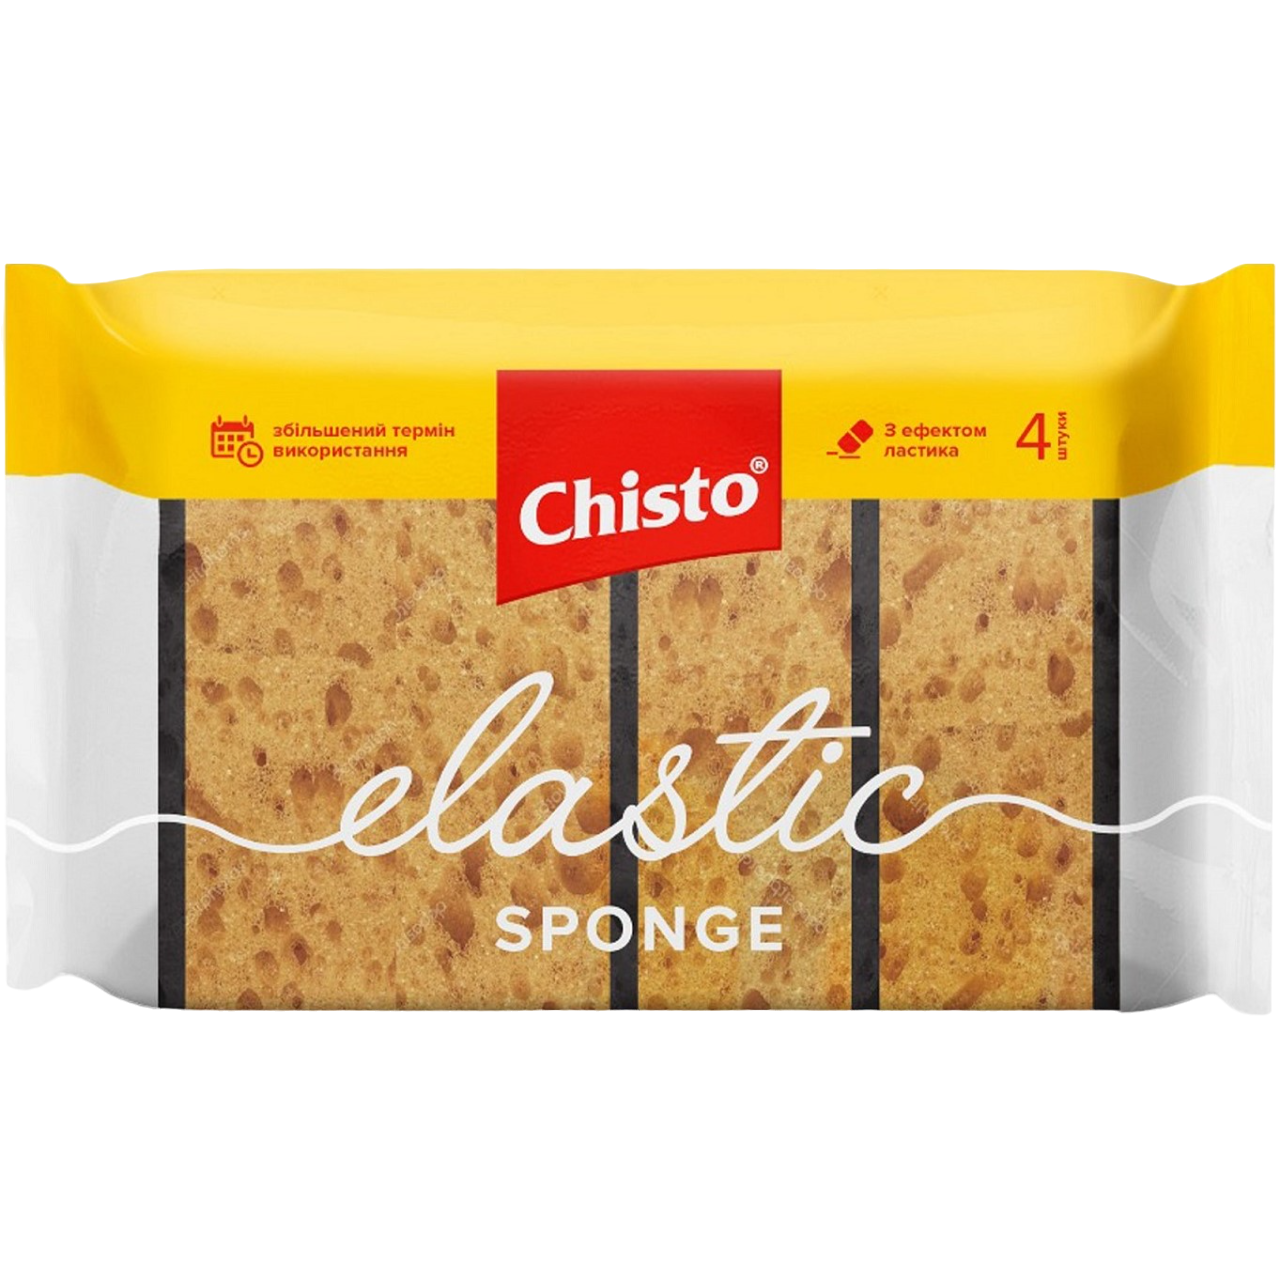 Губки кухонні Chisto Elastic Sponge, 4 шт. - фото 1